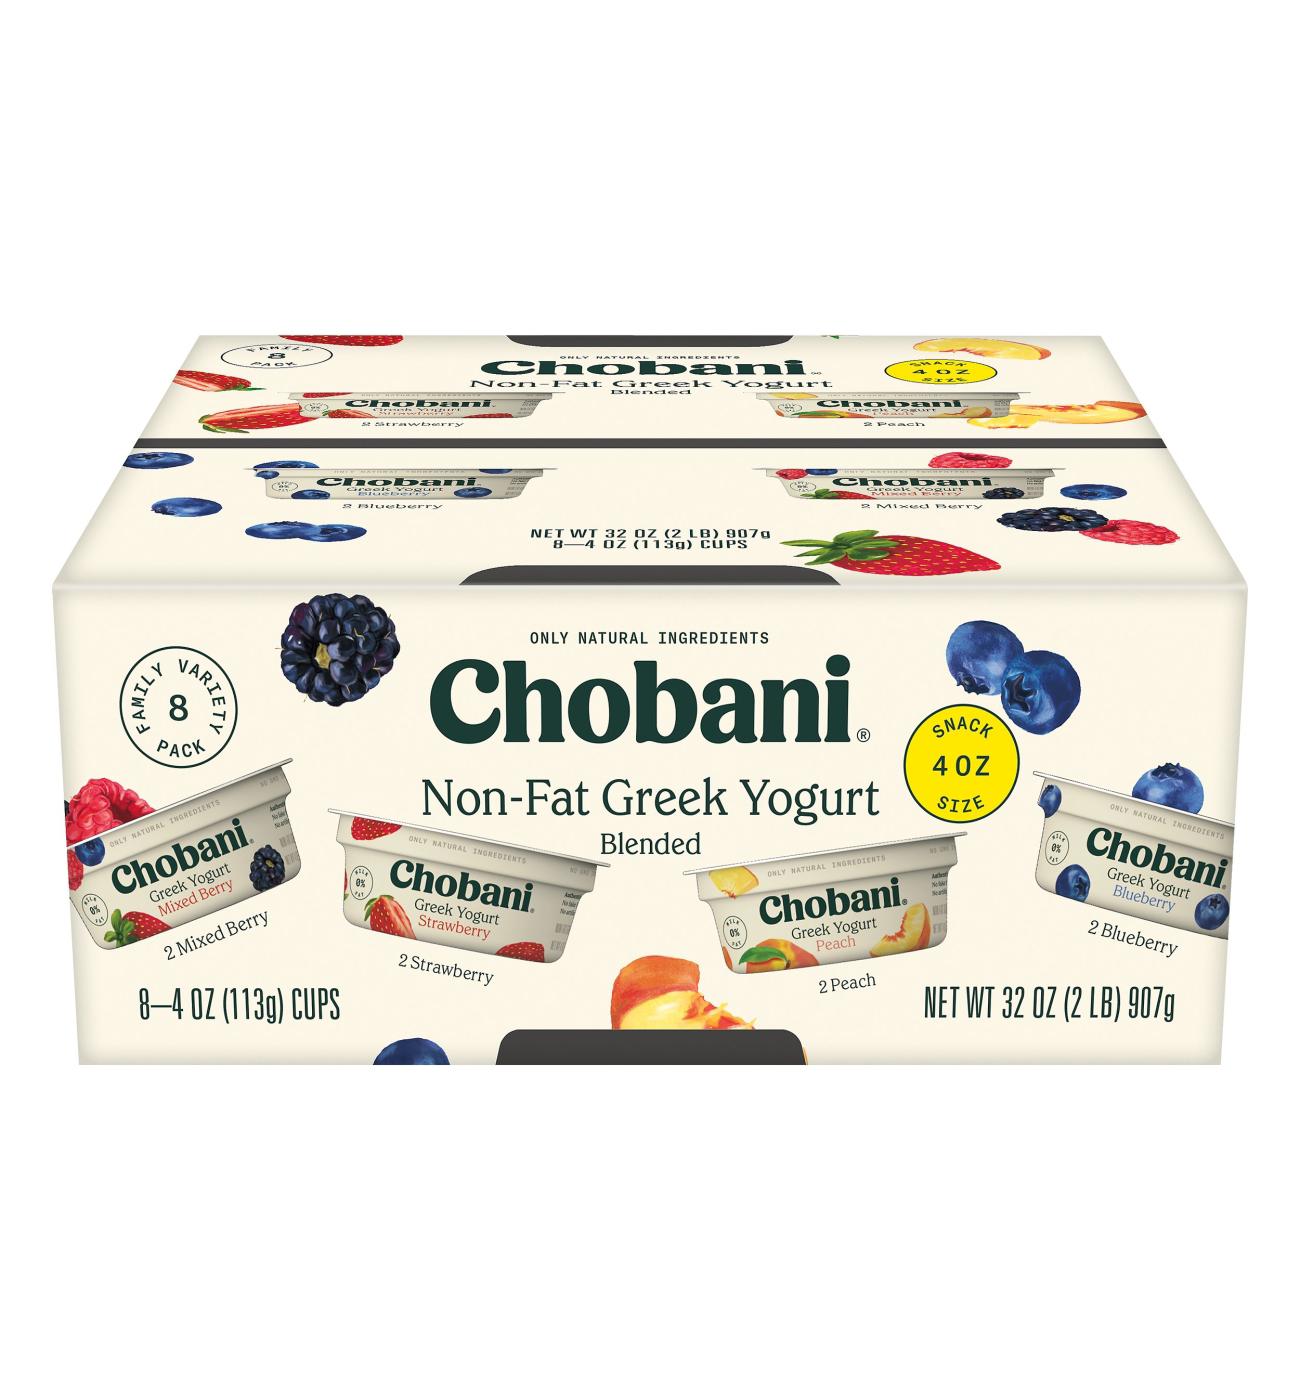 Chobani Non-Fat Blended Greek Yogurt Variety Pack; image 1 of 5